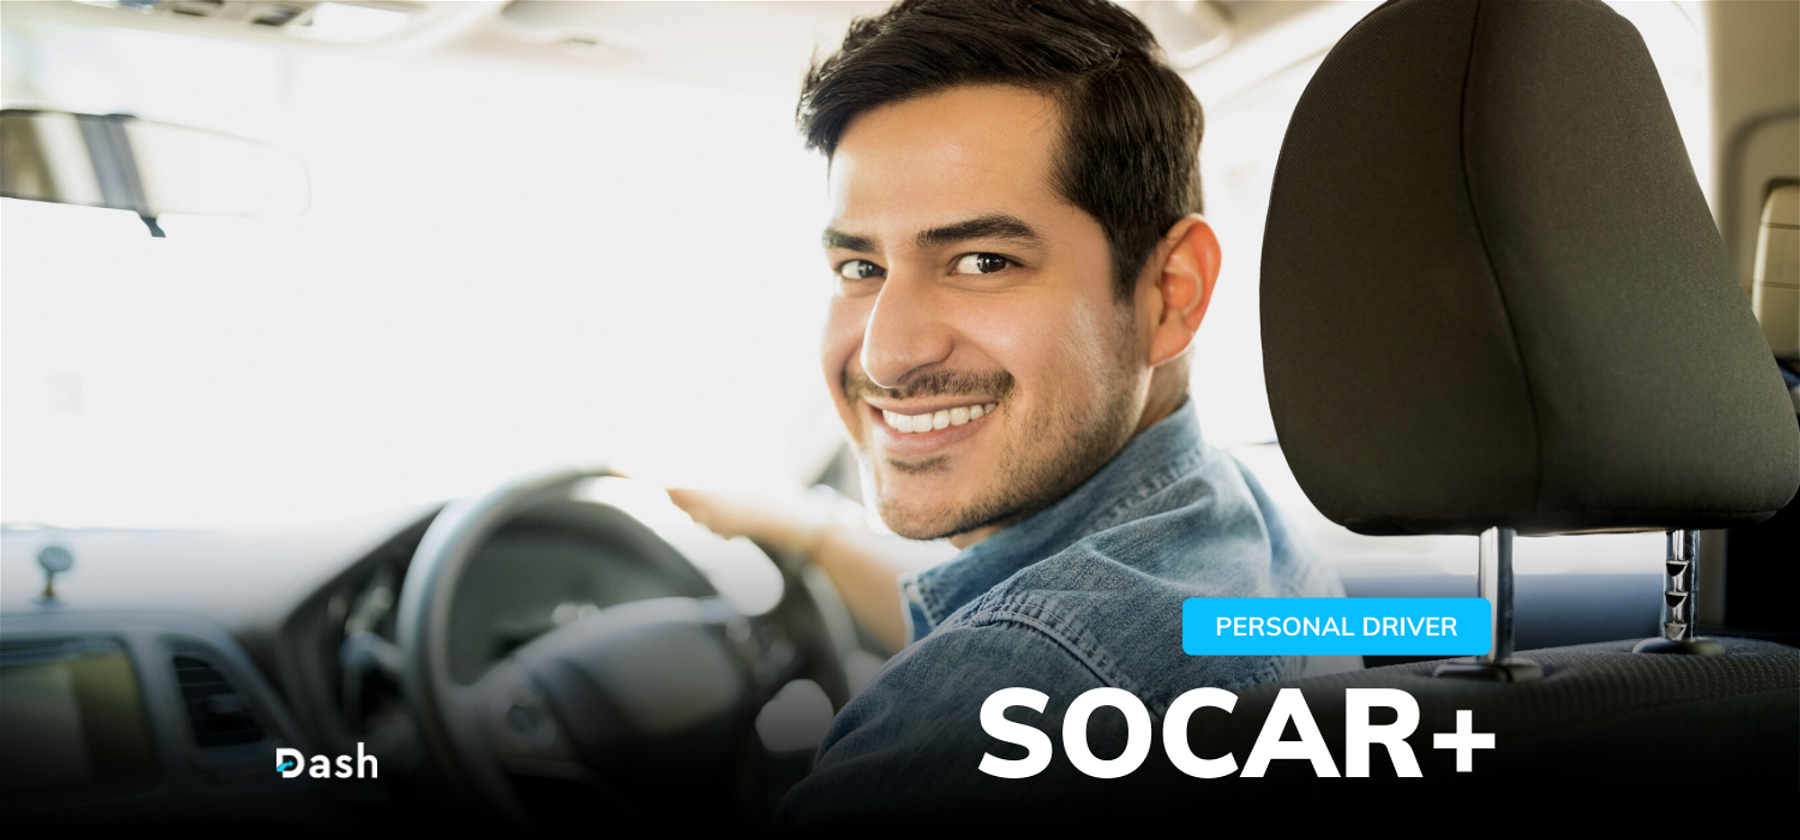 SOCAR+ - Drive SOCAR and Be a Personal Driver 